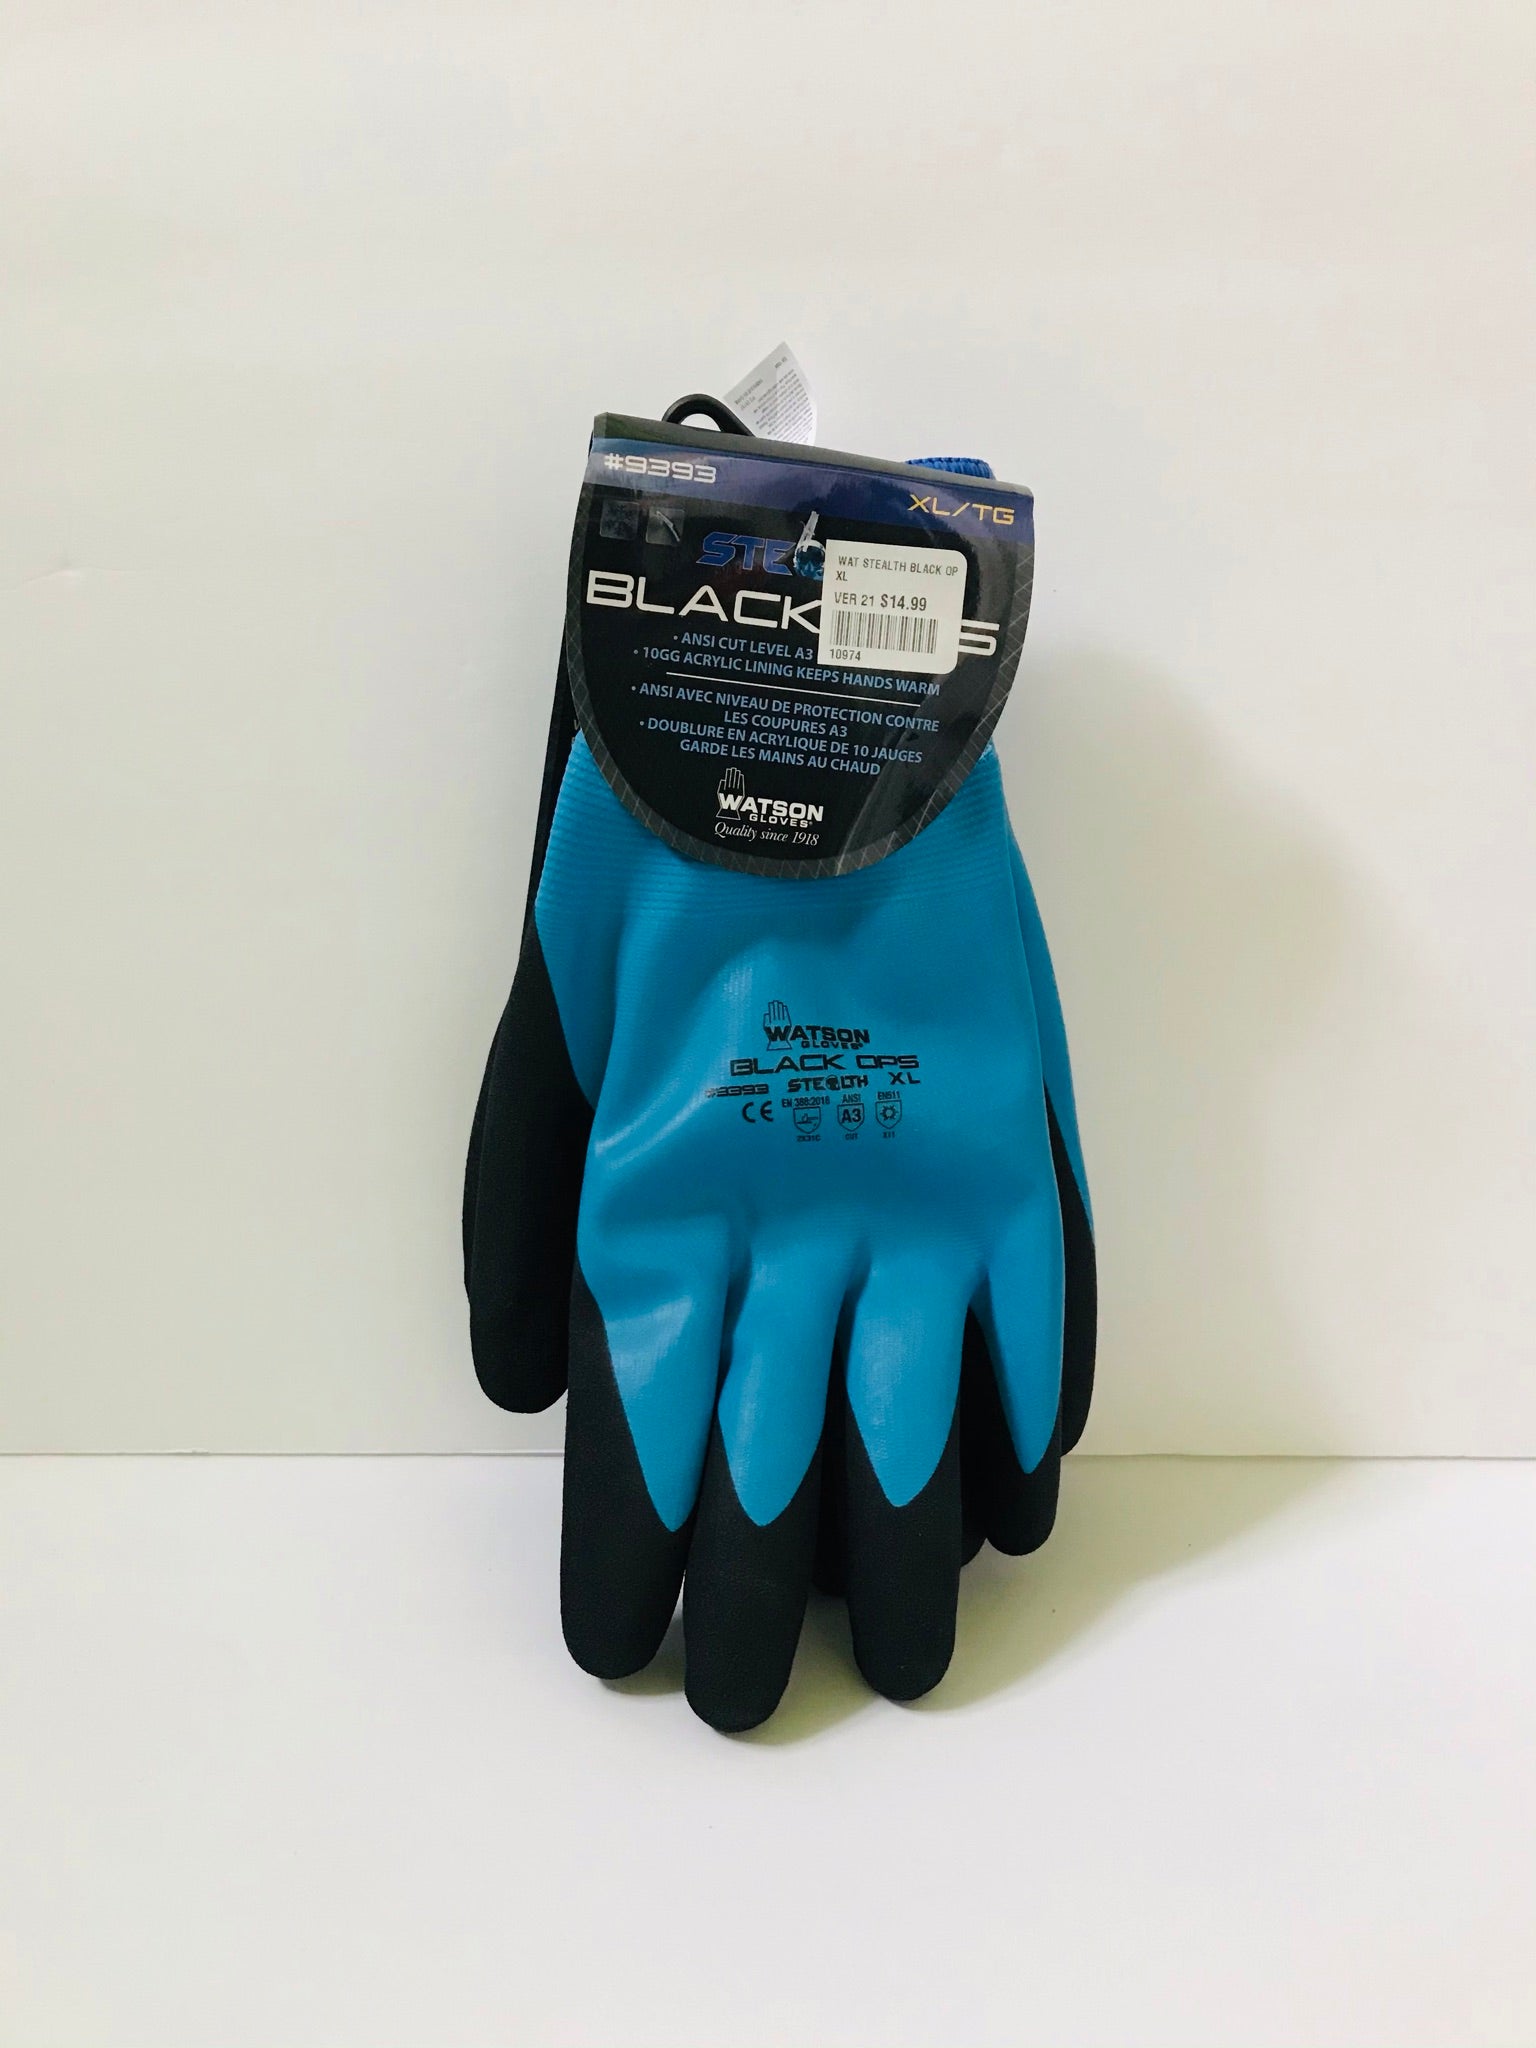 Watson Stealth Black Ops Gloves